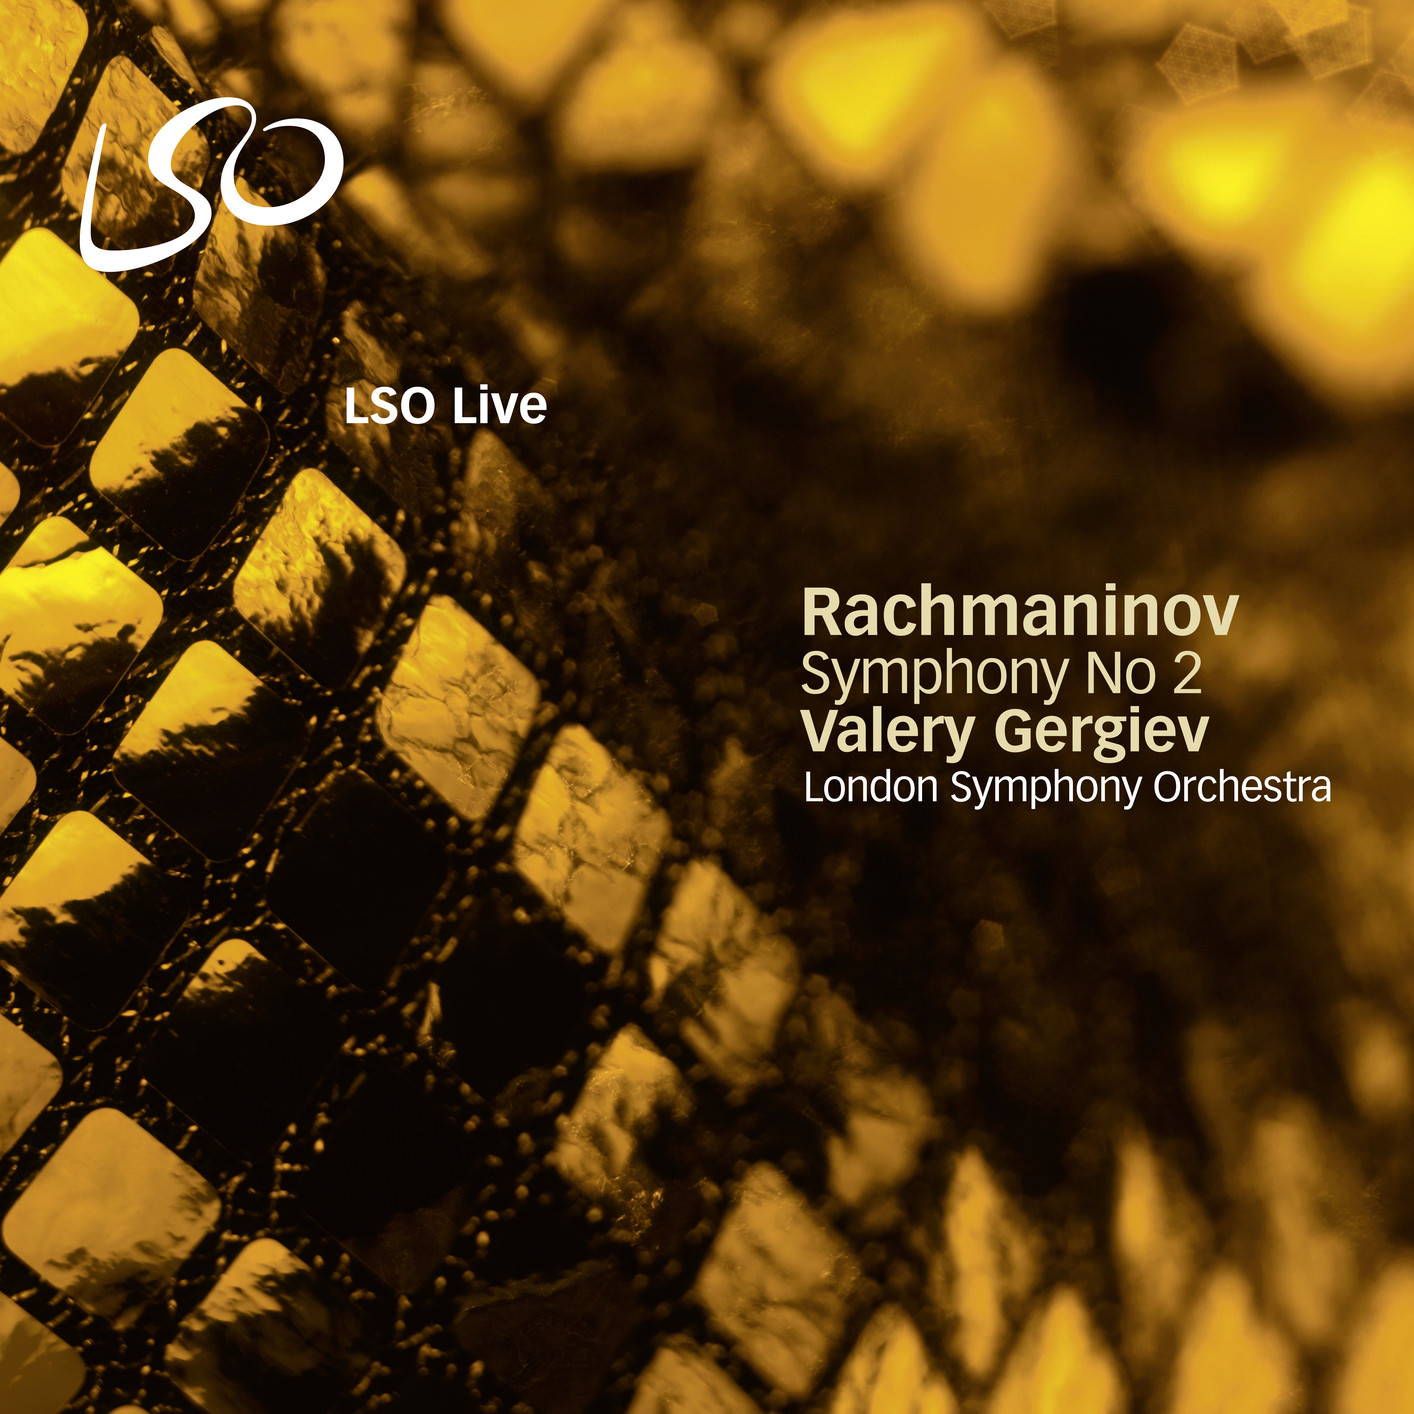 London Symphony Orchestra & Valery Gergiev - Rachmaninov: Symphony No. 2 (2010/2018) [FLAC 24bit/192kHz]